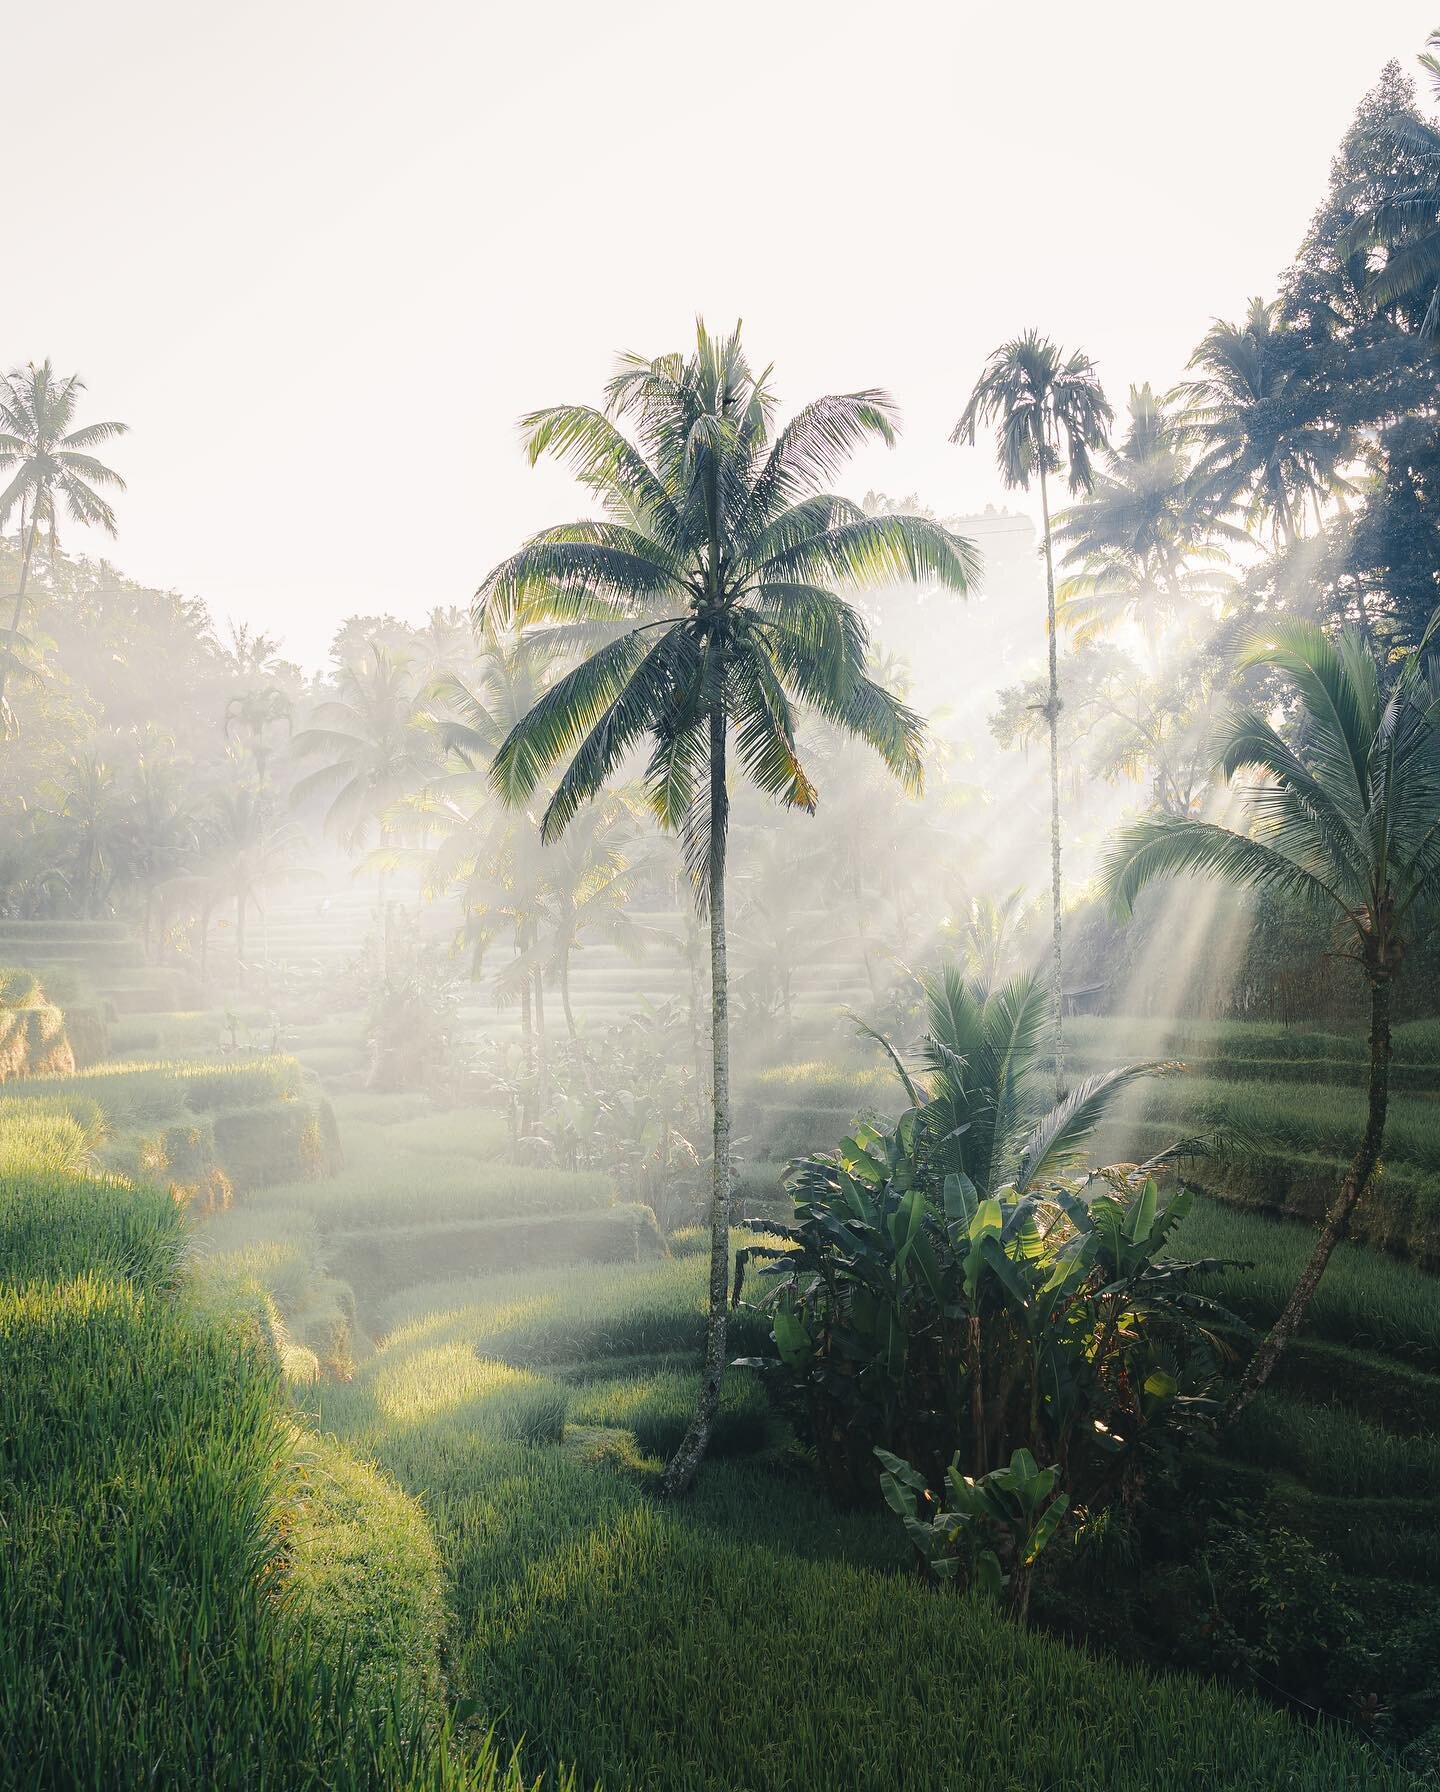 Chasing the light rays in Bali&hellip;

.

.

.

#indonesiatravel #pesonaindonesia #balivibes #visualsoflife #asiatravels #balitour #theworldshotz #passionpassport #wekeepmoments #sonyphotographer #discovernature #balitravel #roamtheplanet #theglobew